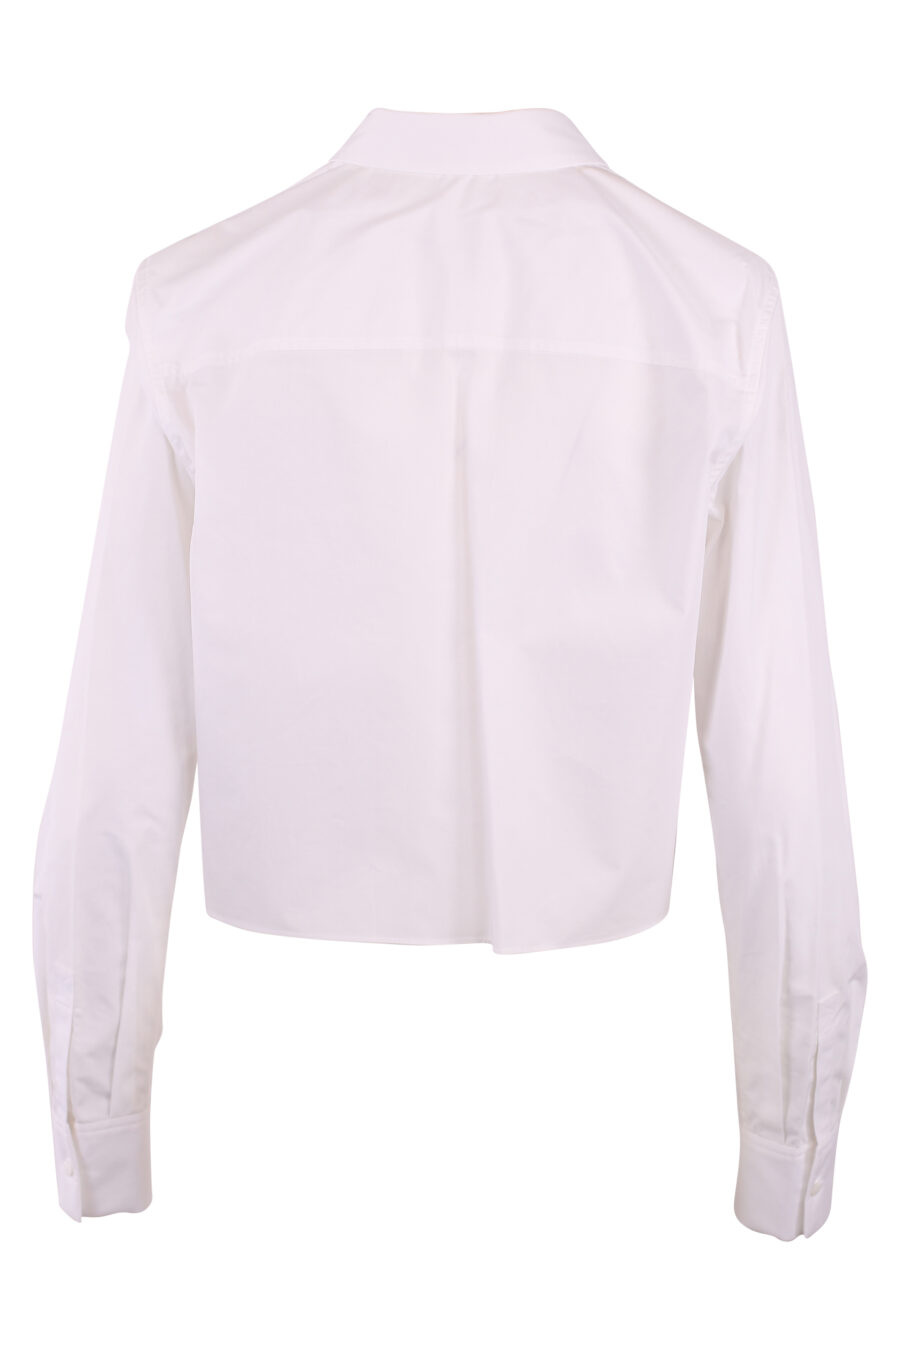 Camisa blanca con maxilogo firma "karl" negro - IMG 6181